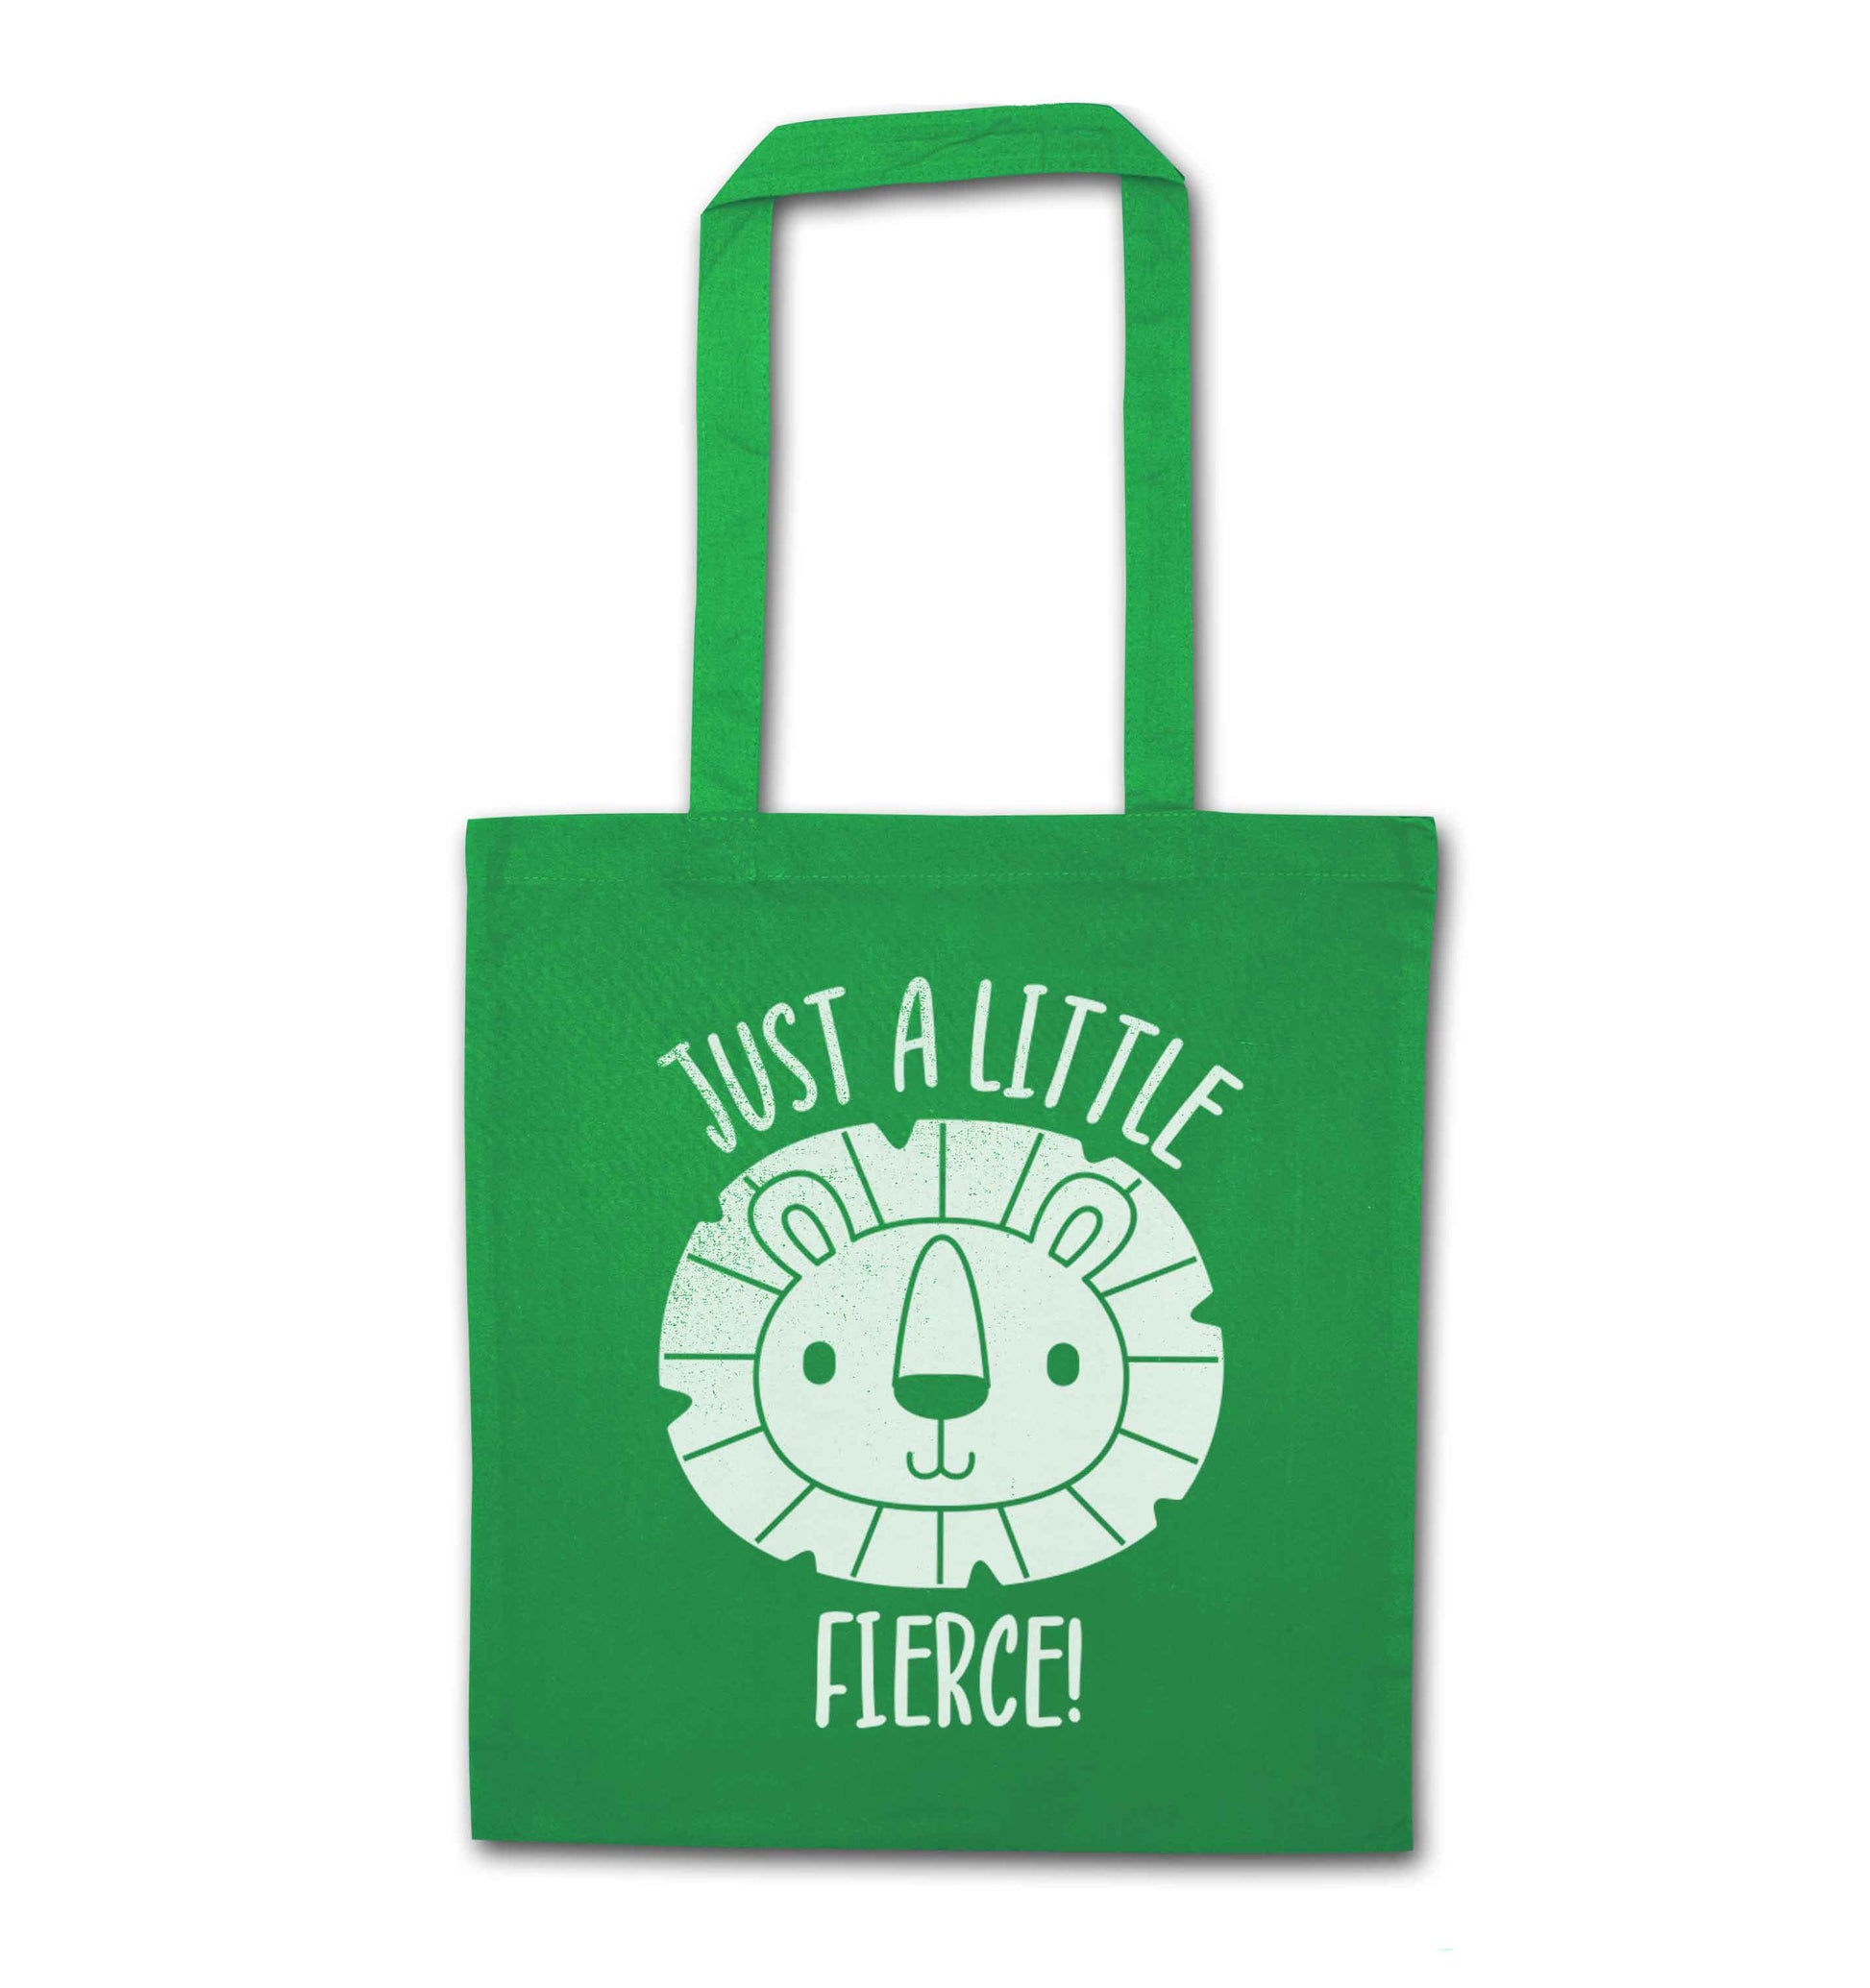 Just a little fierce green tote bag